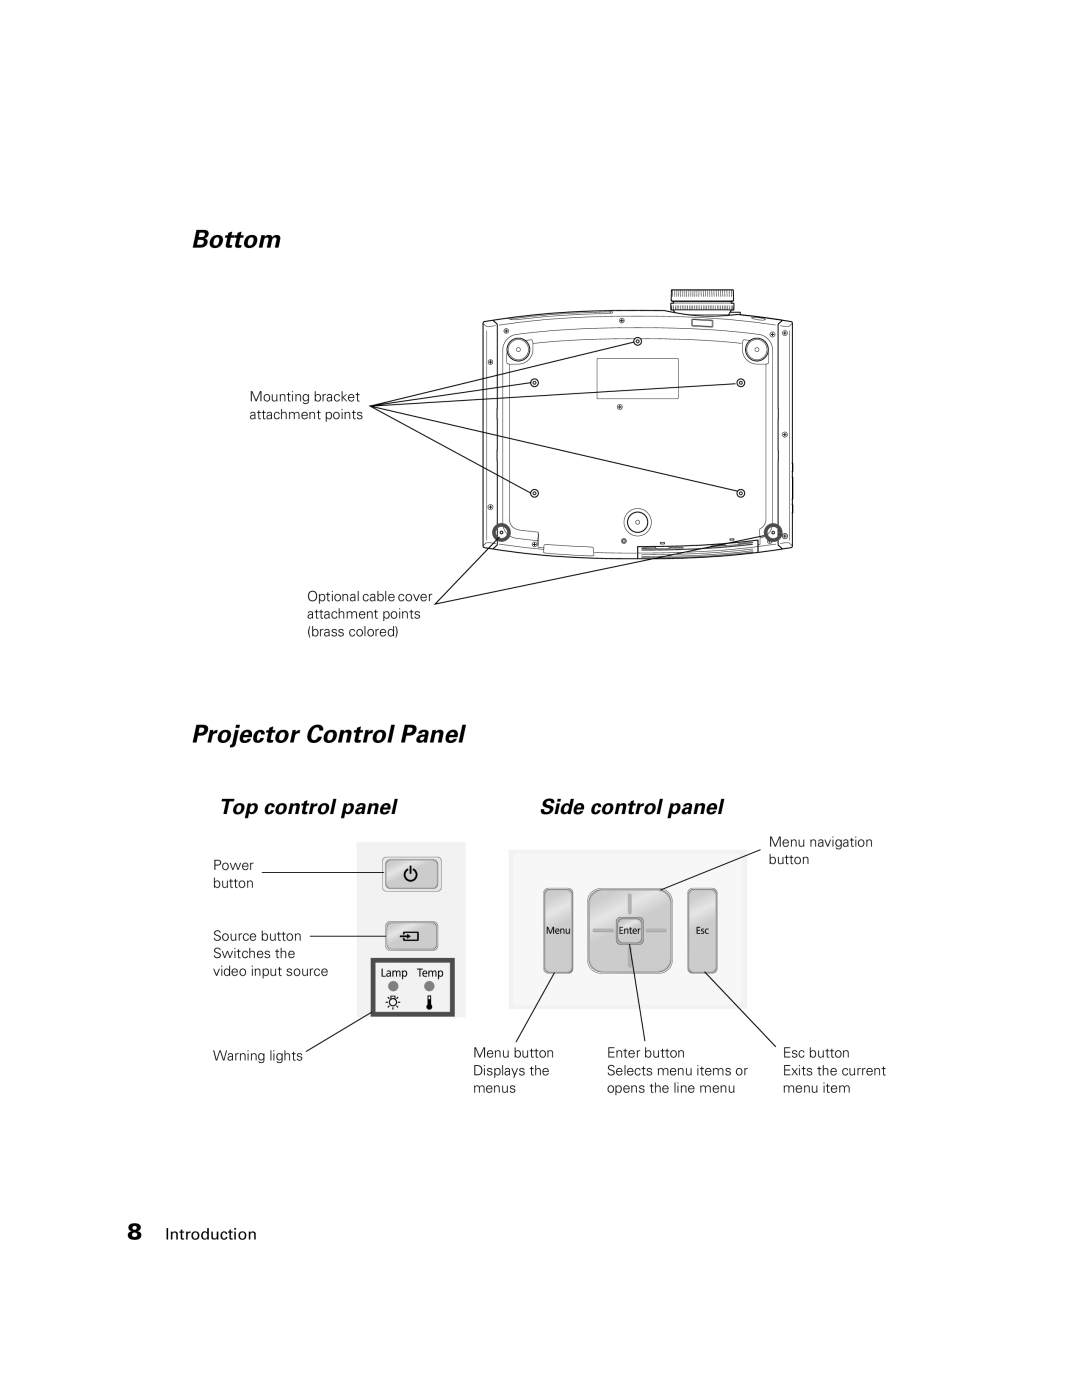 Epson 9350, 9700 manual Bottom, Projector Control Panel, Top control panel, Side control panel 